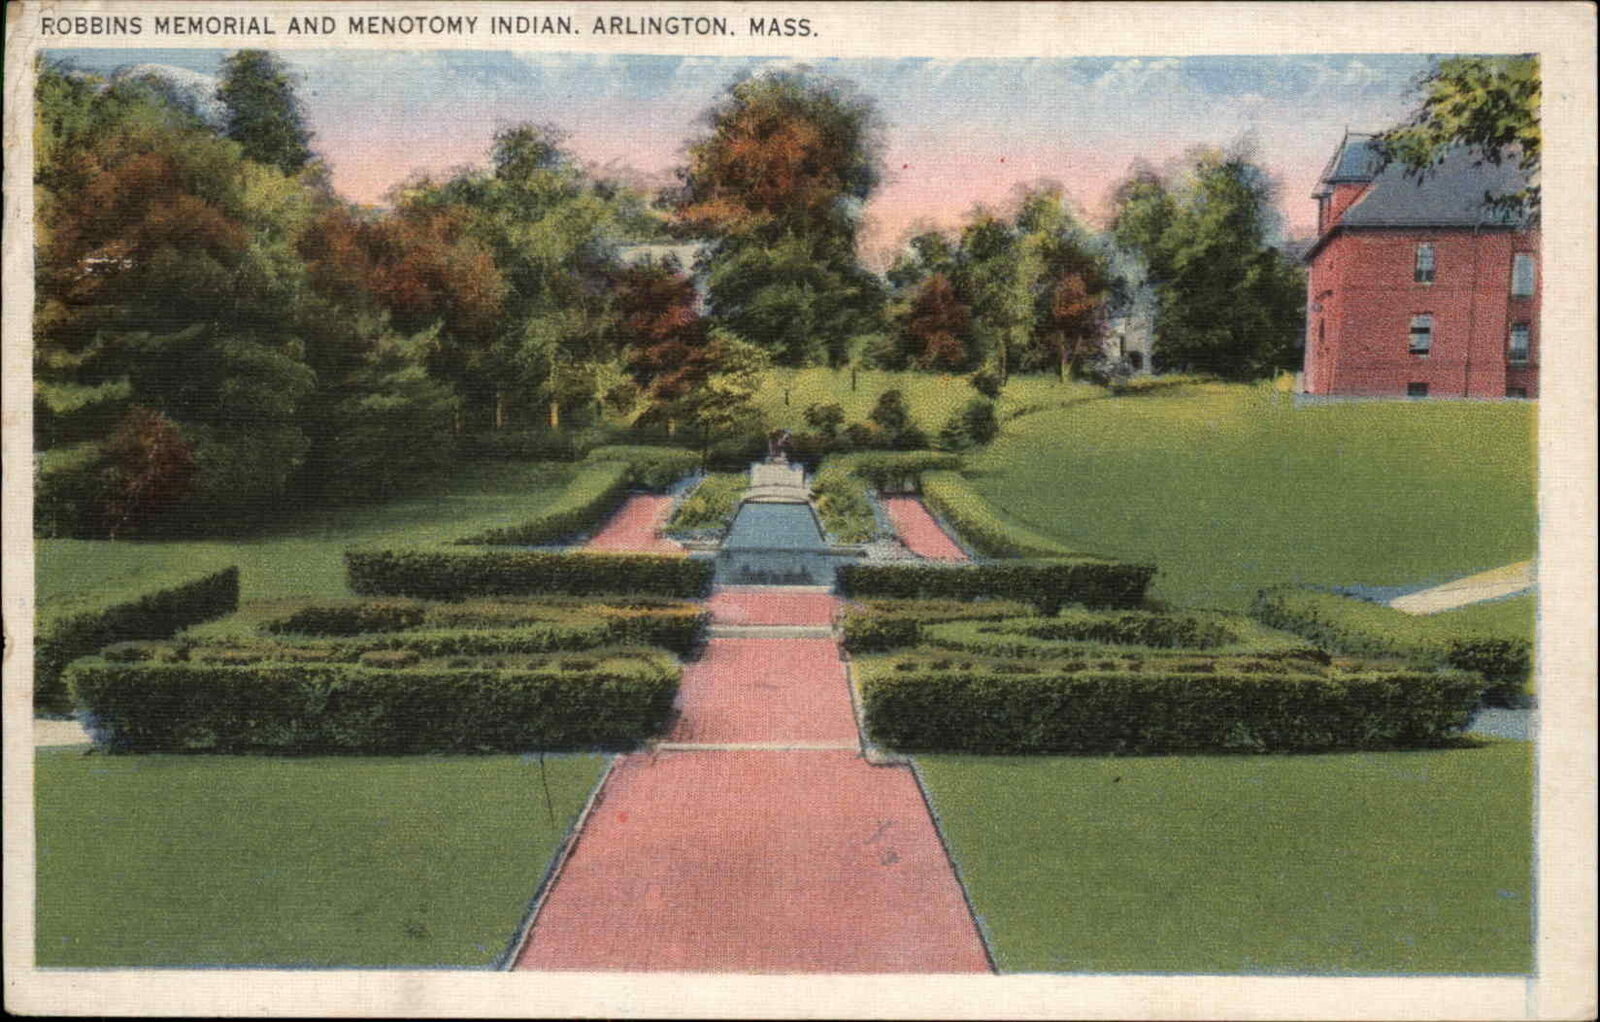 Arlington Massachusetts MA Robbins Memorial Menotomy Indian c1920s-30s Postcard